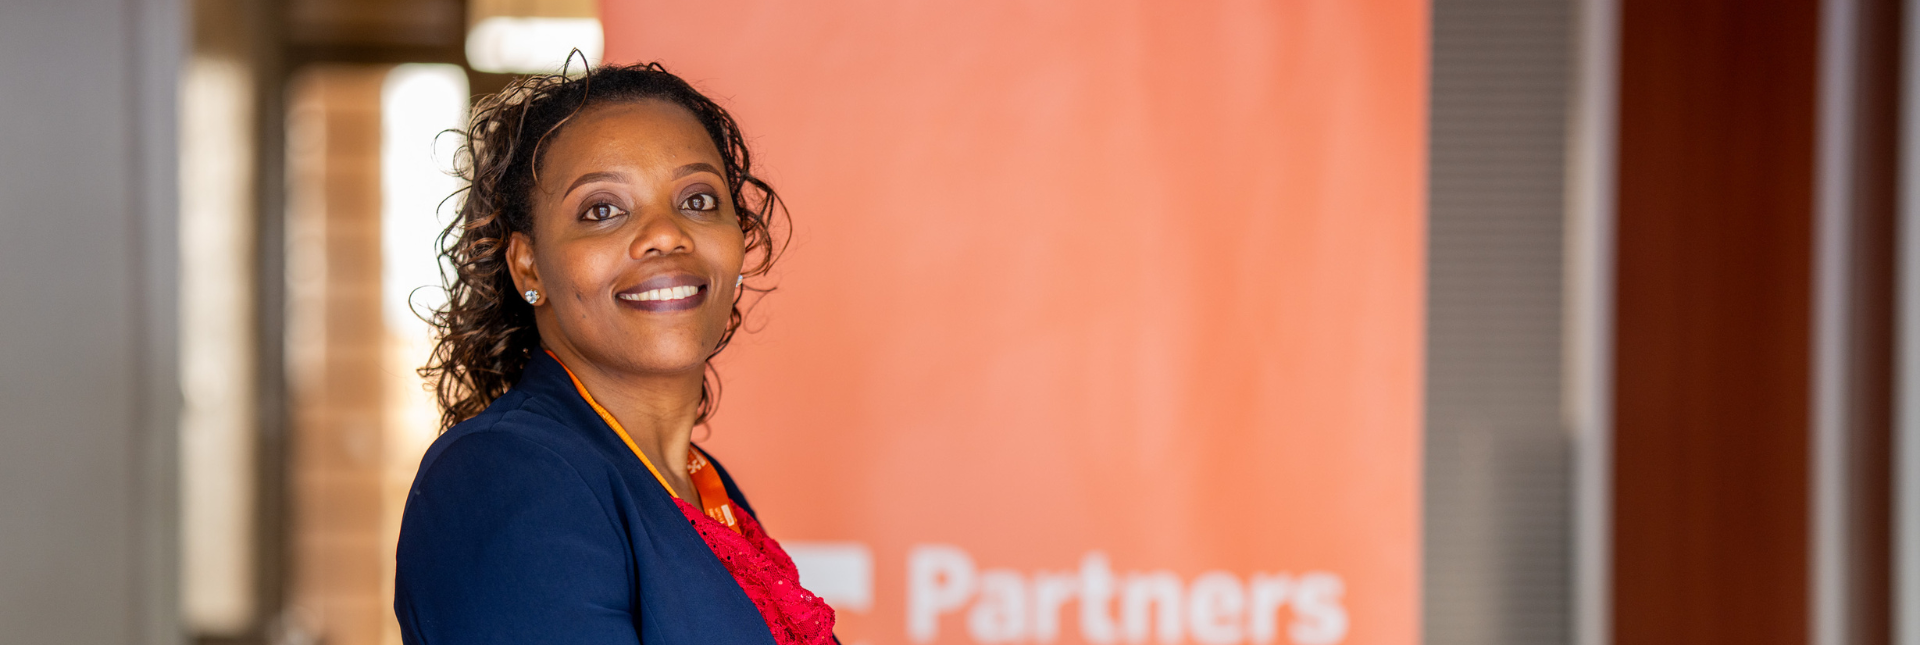 UGHE Alumna Advocates for Community Based Mental Health Care Model in Rwanda and Beyond